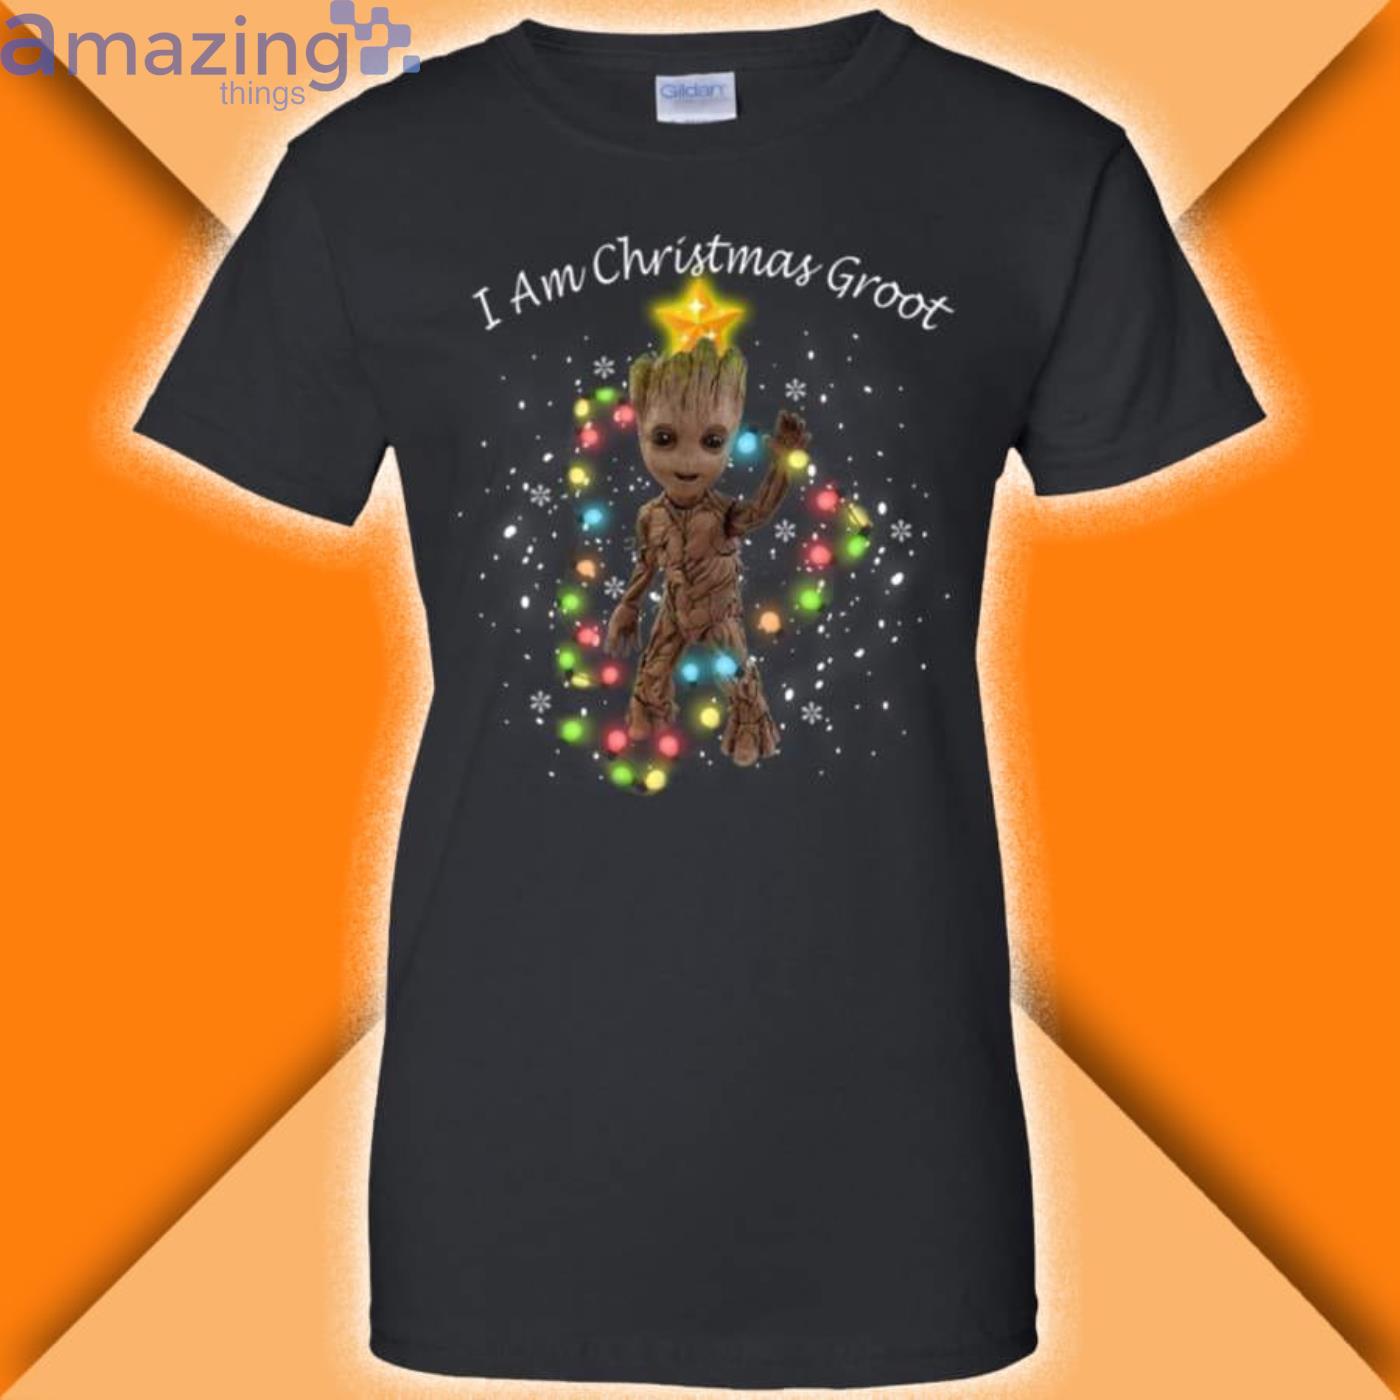 I Am Christmas Groot Shirt Product Photo 1